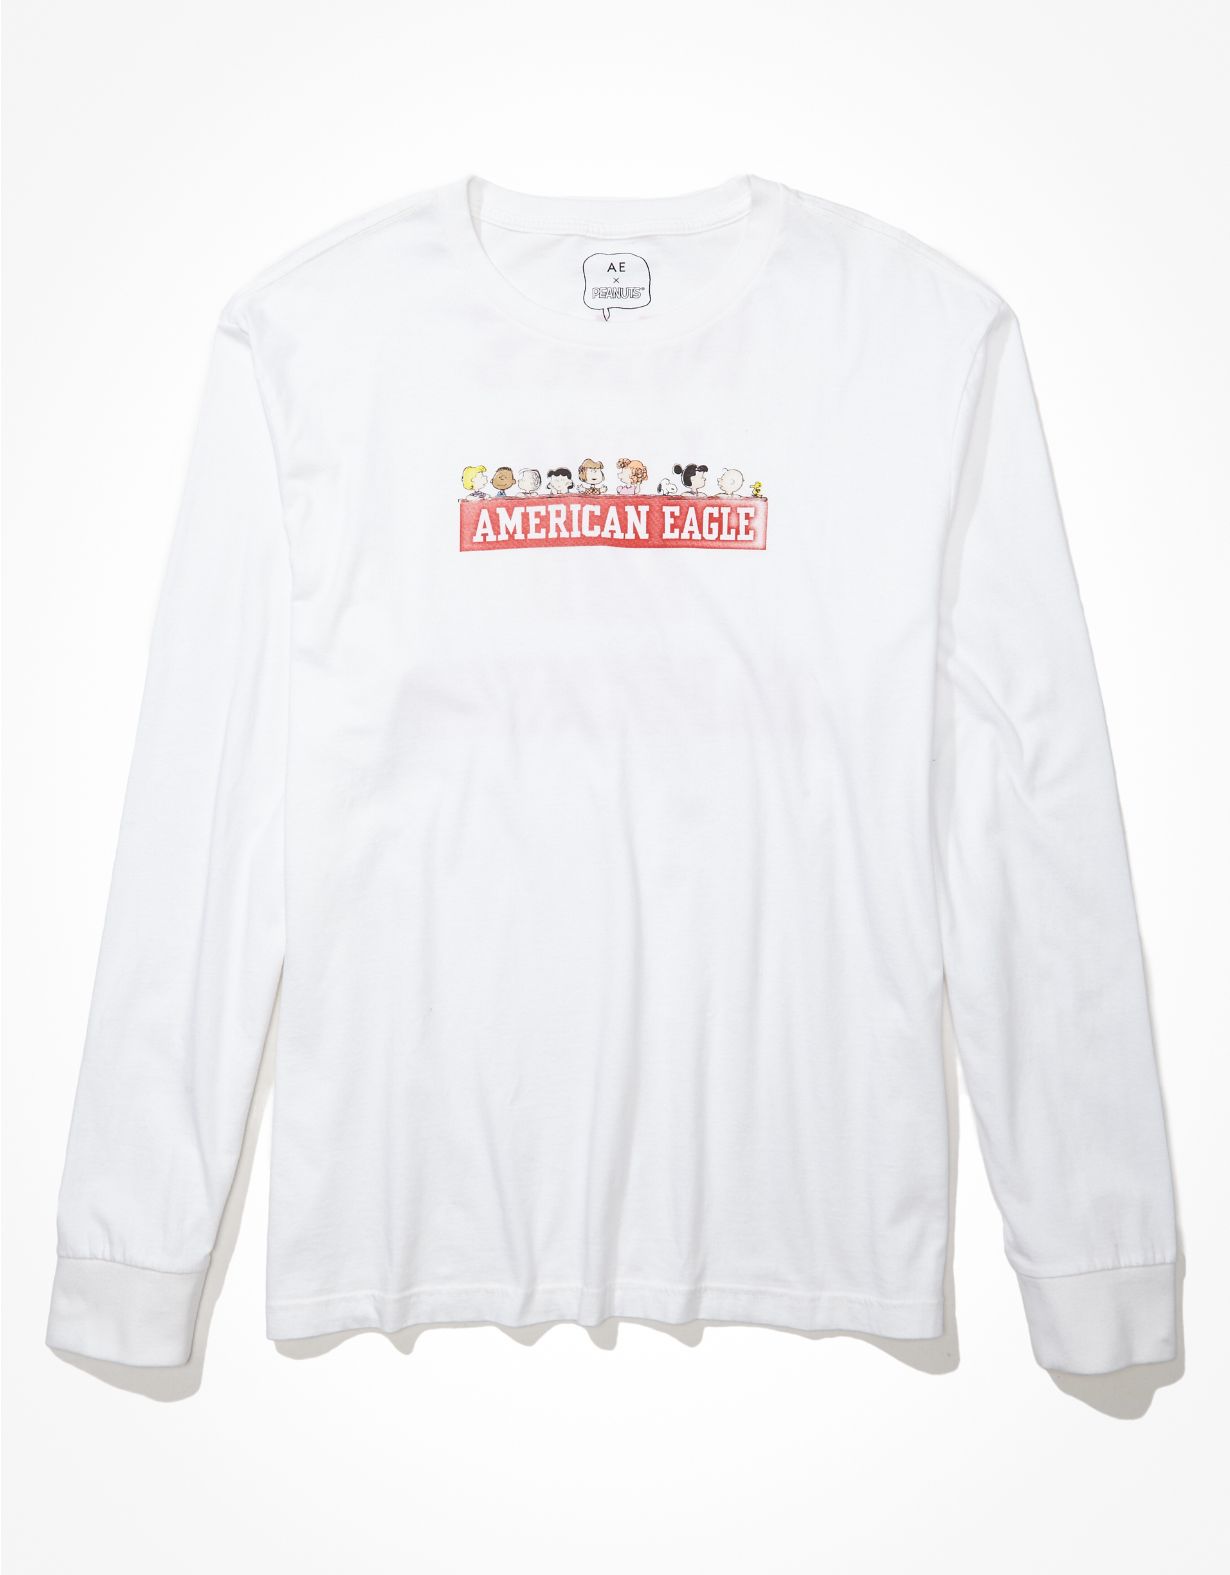 AE x Peanuts Super Soft Long-Sleeve Graphic T-Shirt